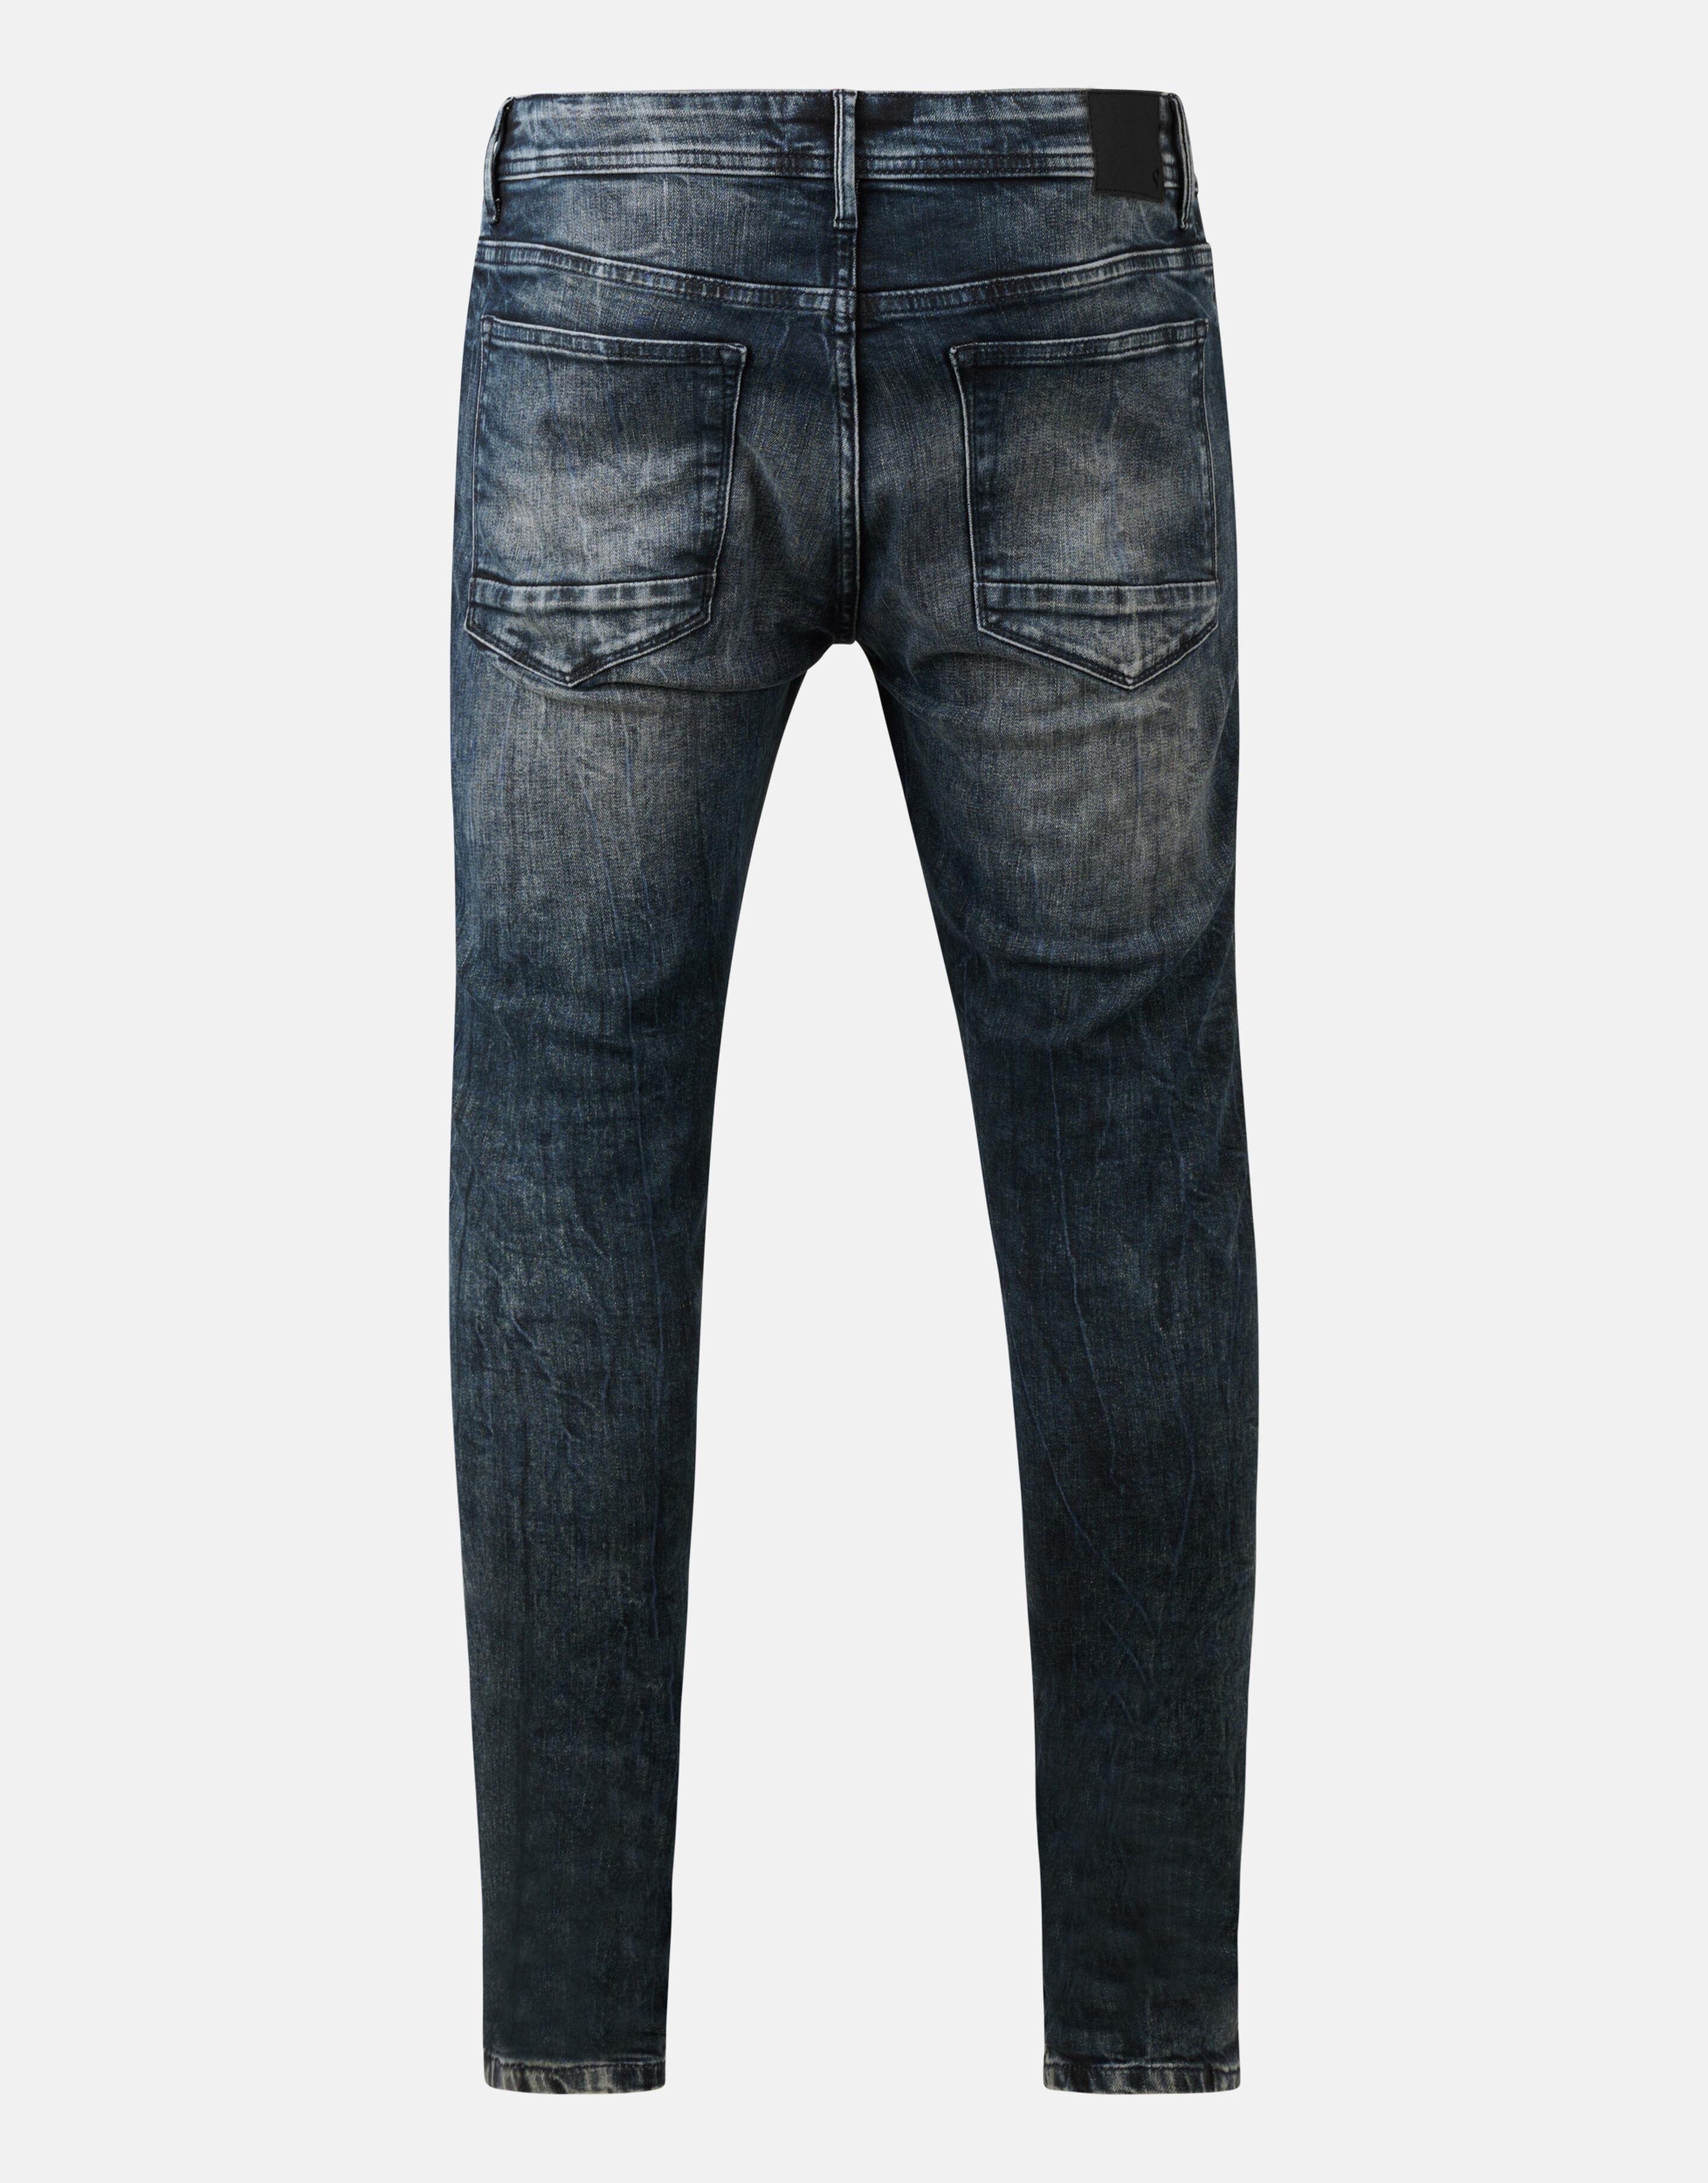 Skinny Jeans Blau/Grau Länge 34 SHOEBY MEN